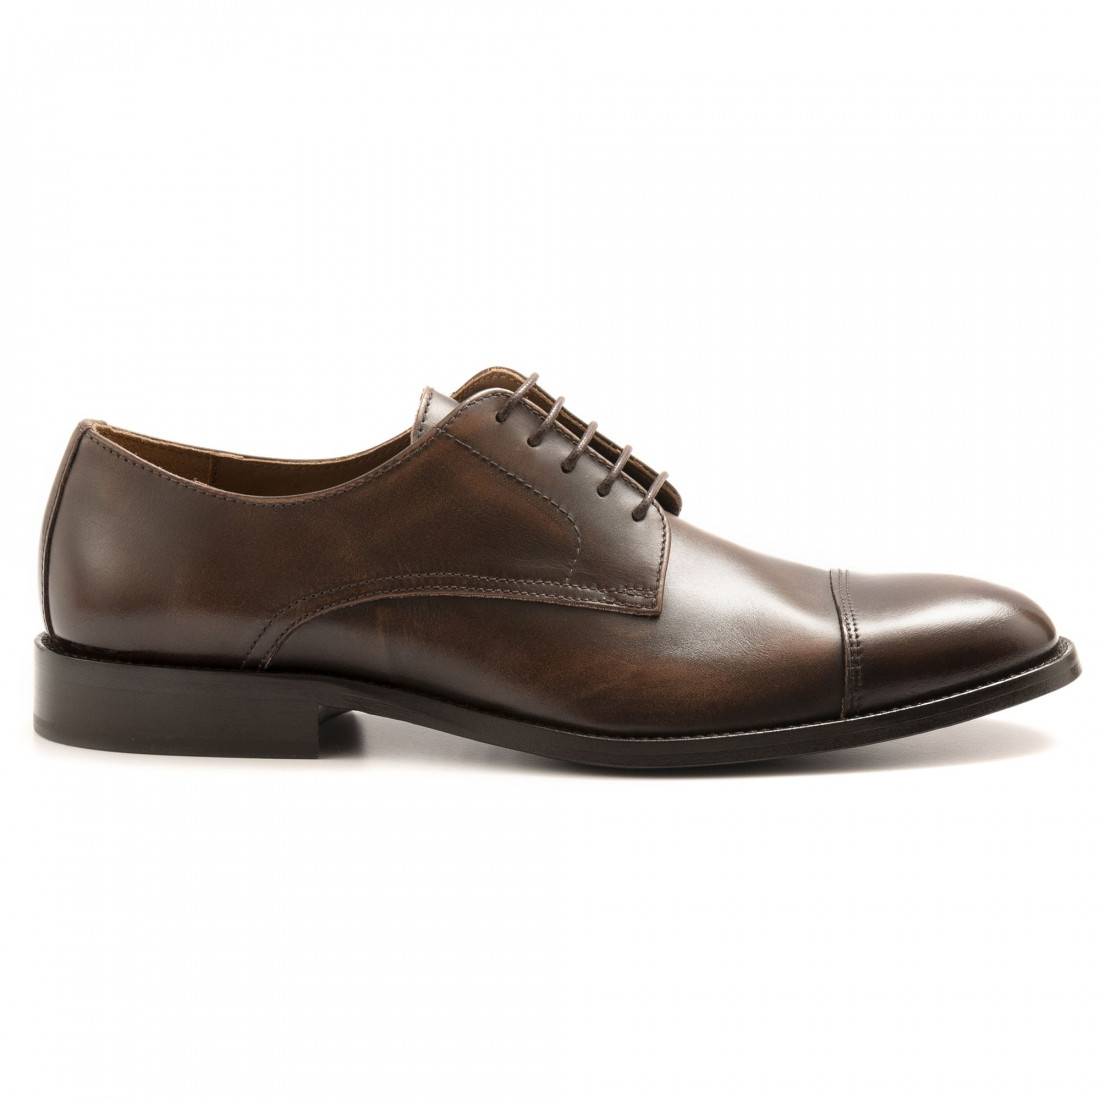 Men's Marco Ferretti derby shoes in brown leather